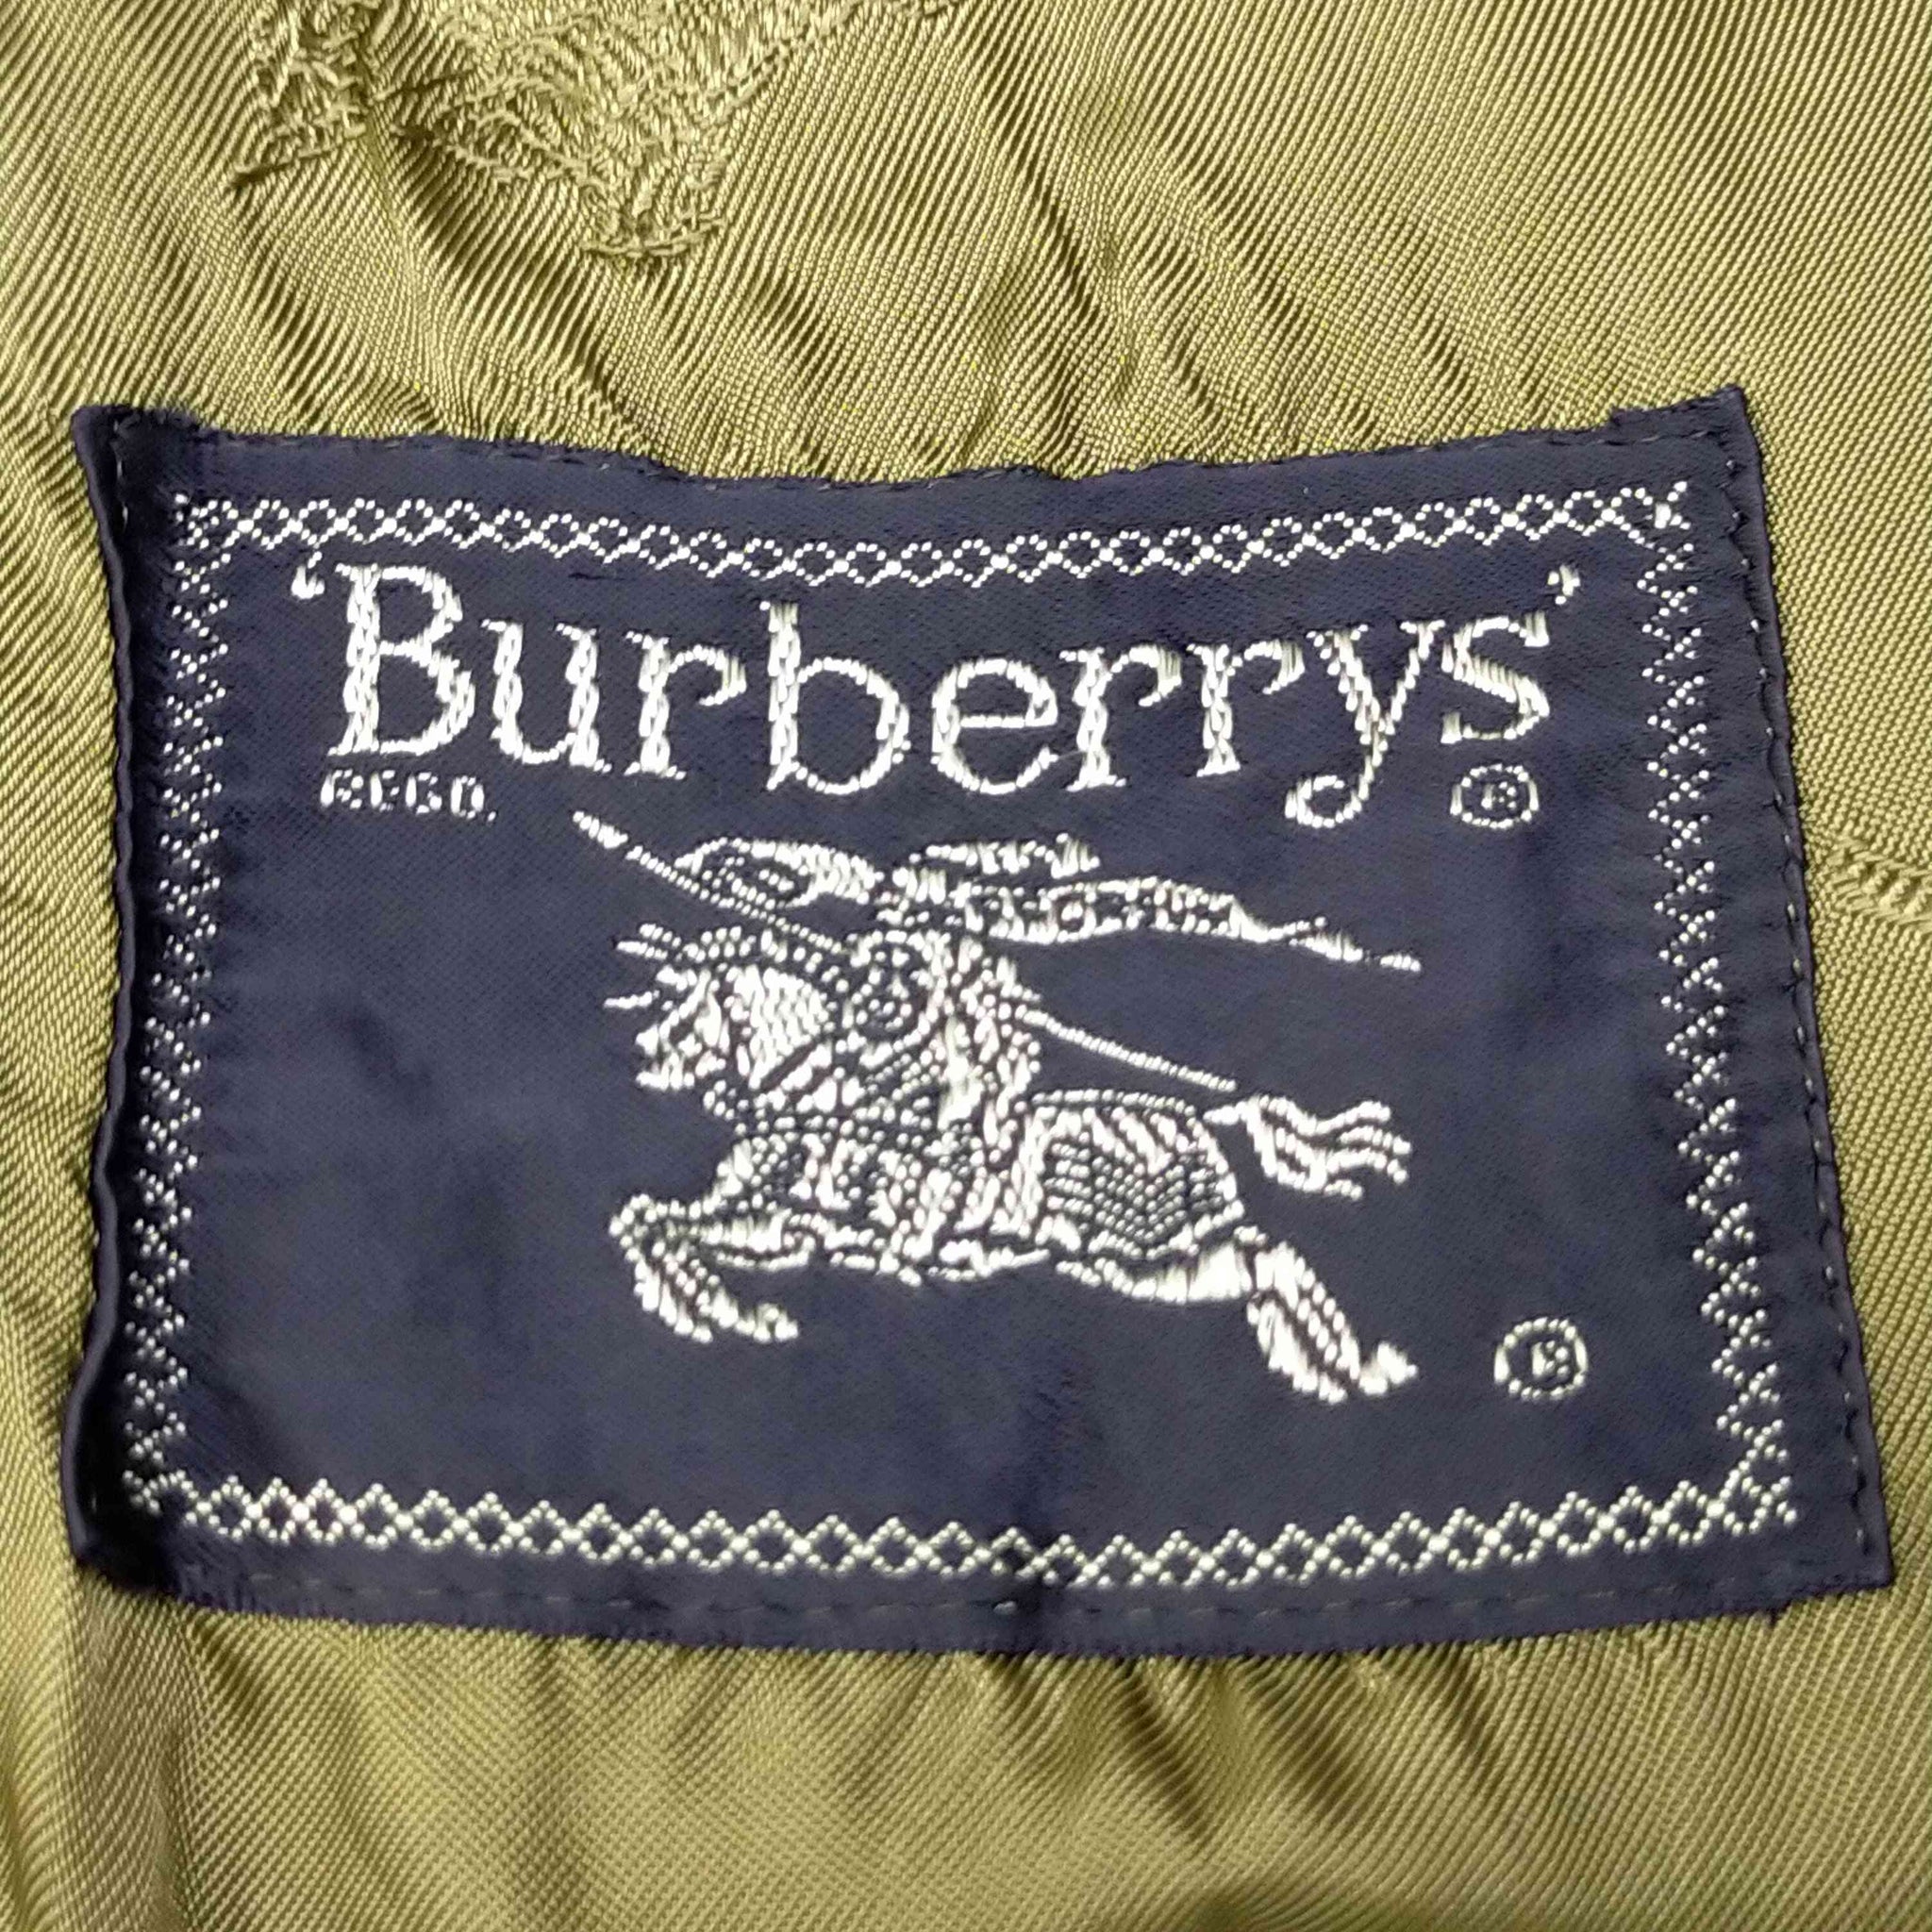 BURBERRYS(バーバリーズ)マルチチェックテーラードジャケット